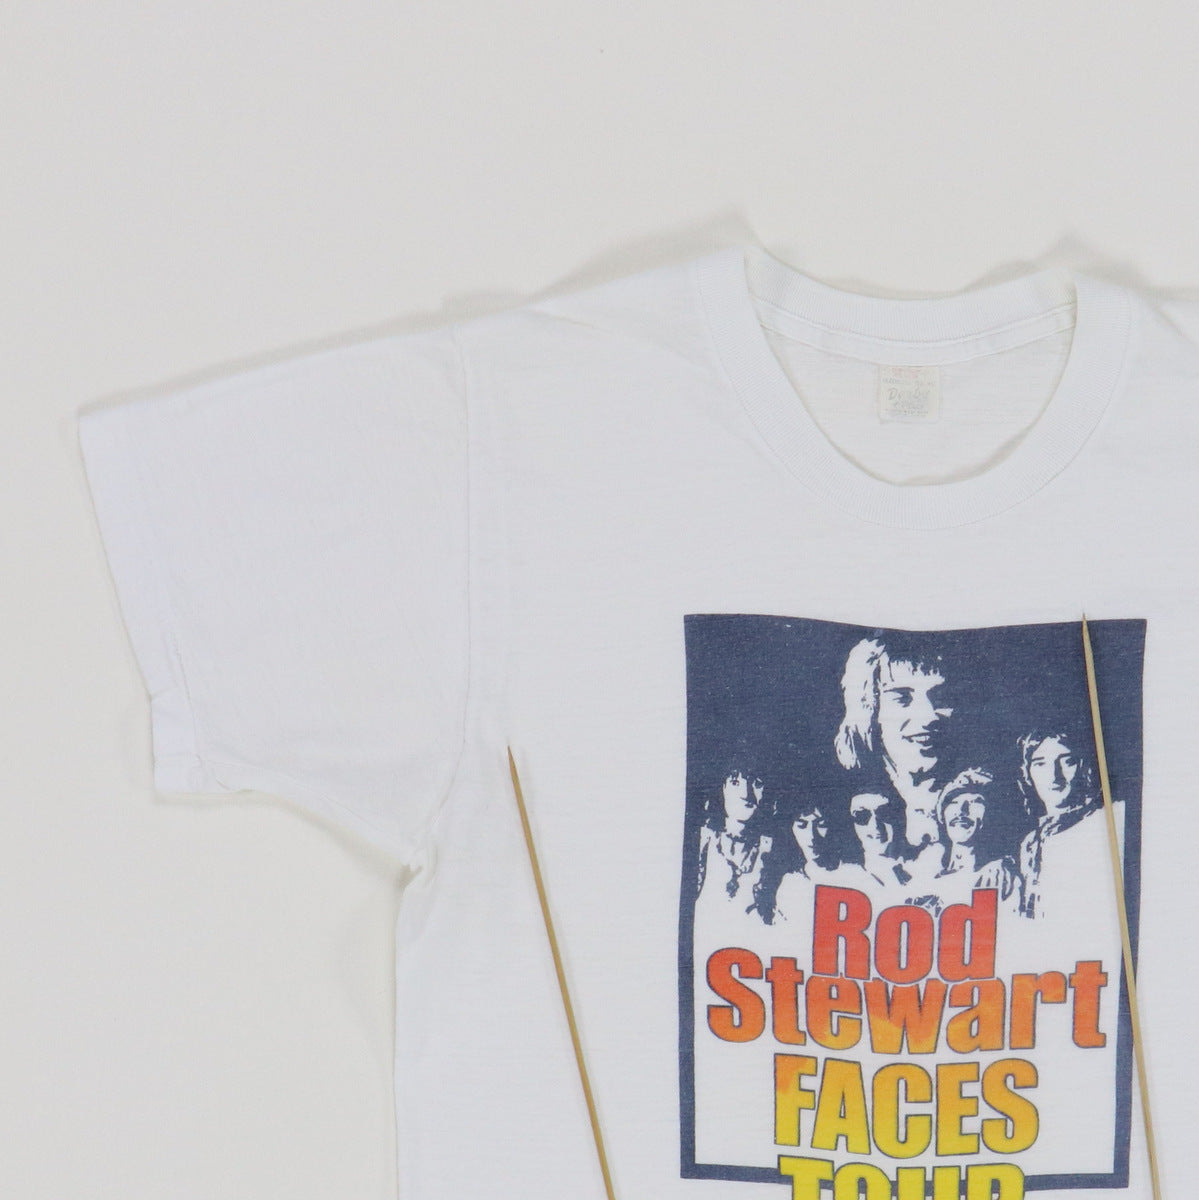 1975 Rod Stewart Faces Tour Shirt